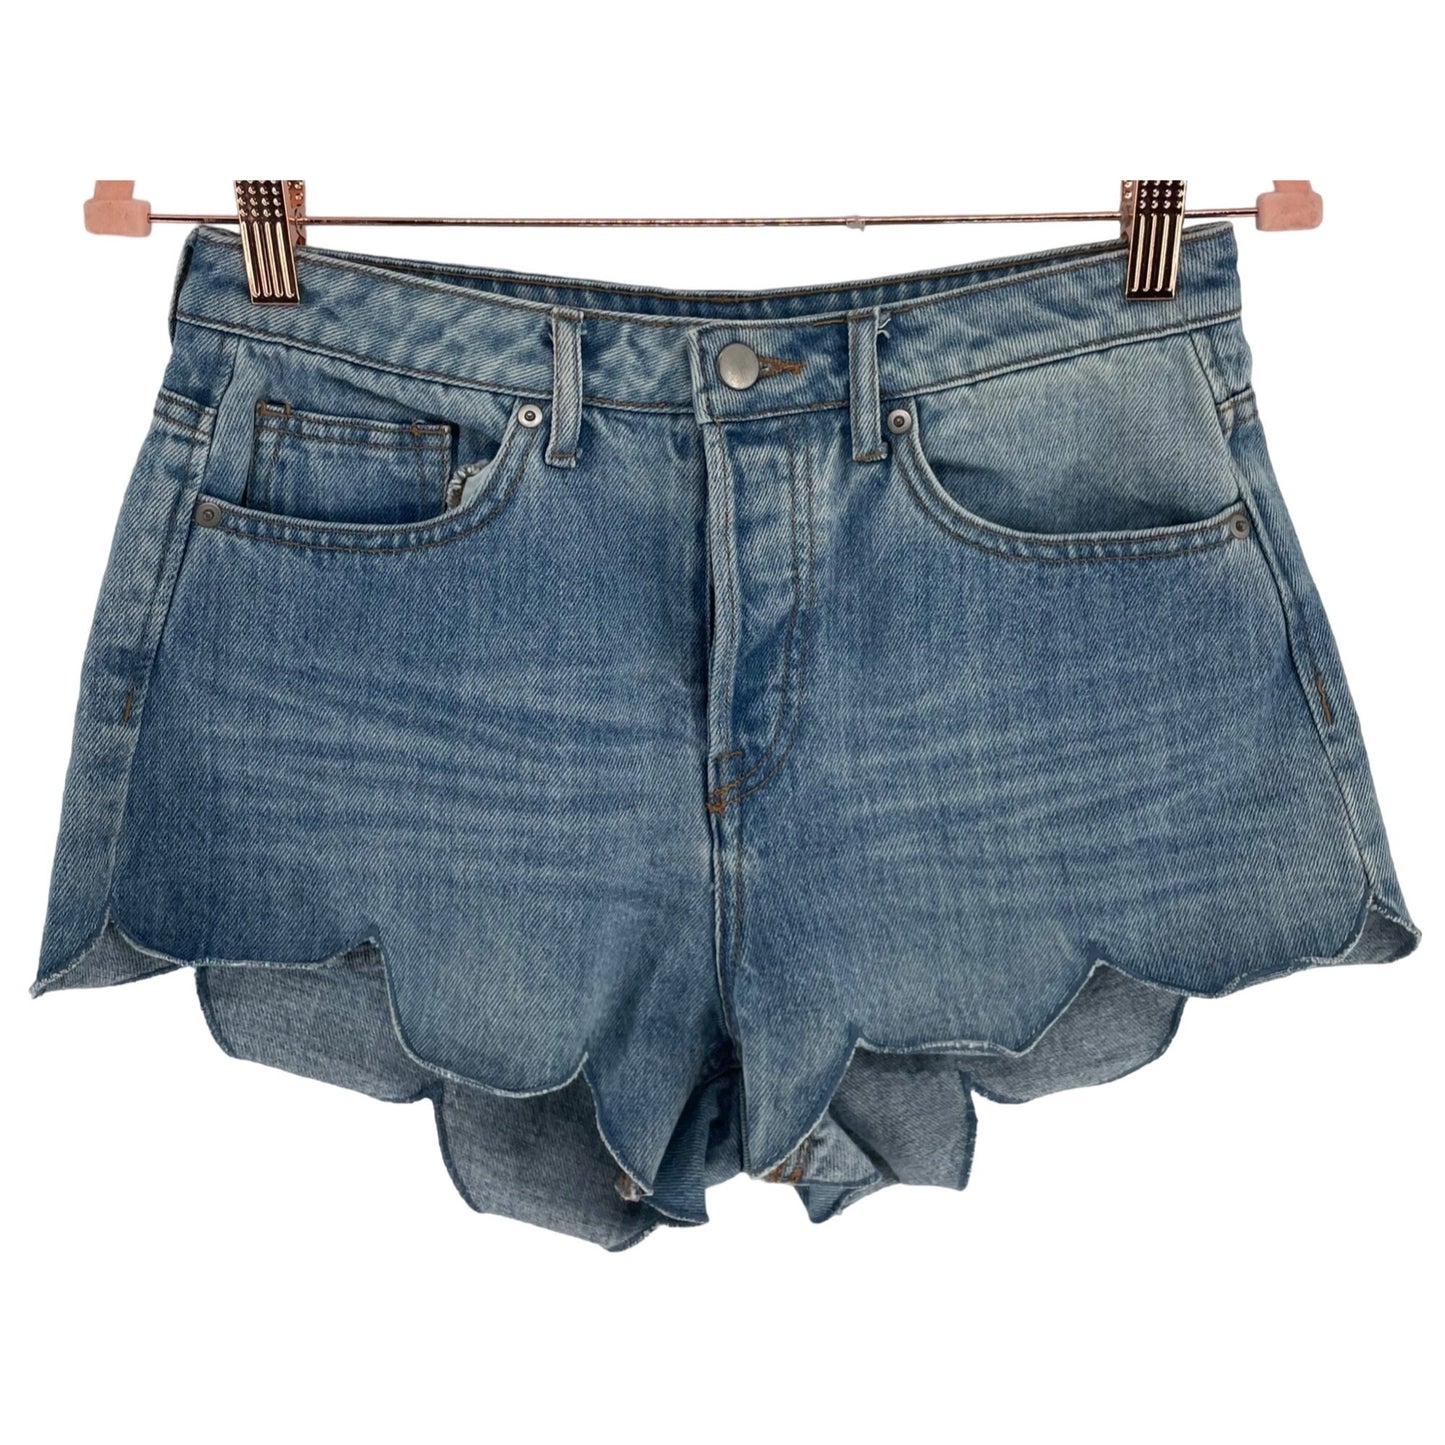 H&M Women's Size 6 Light Wash Whiskered Blue Jean Ruffle Trim Denim Shorts